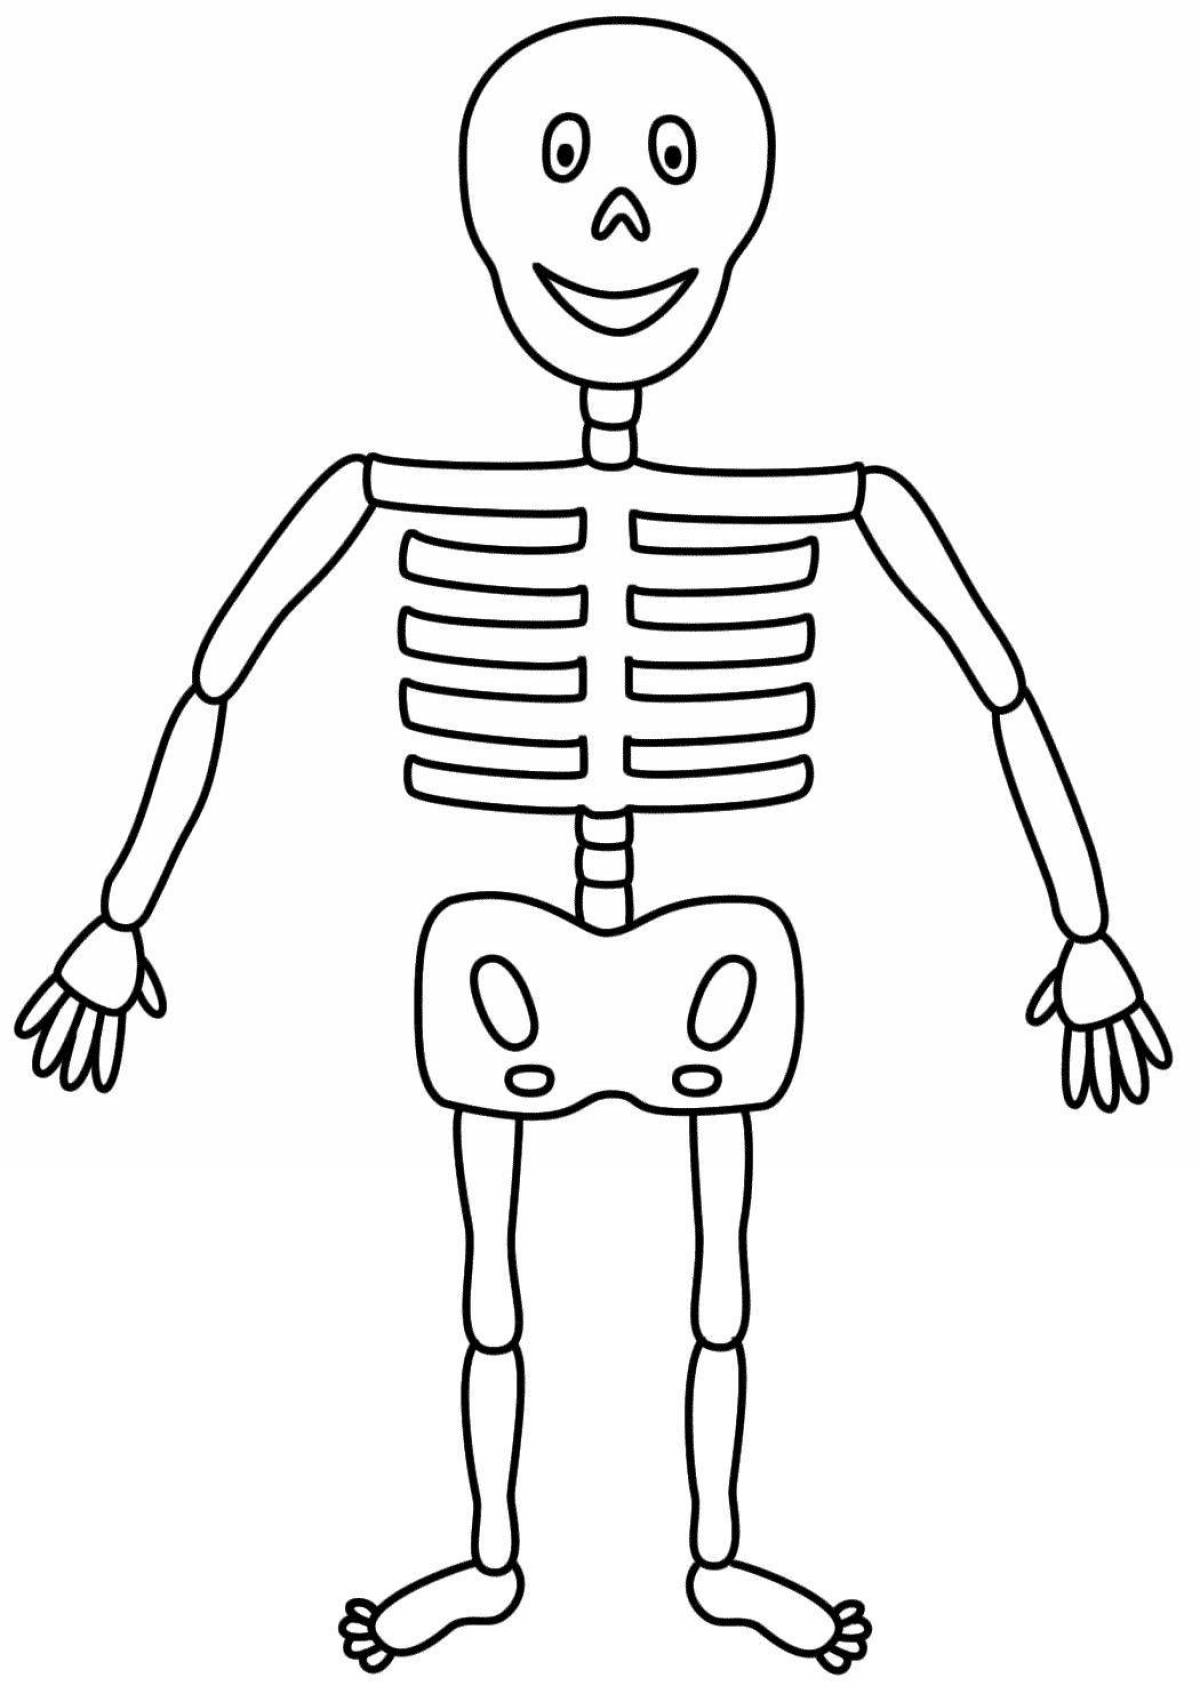 Human skeleton coloring book